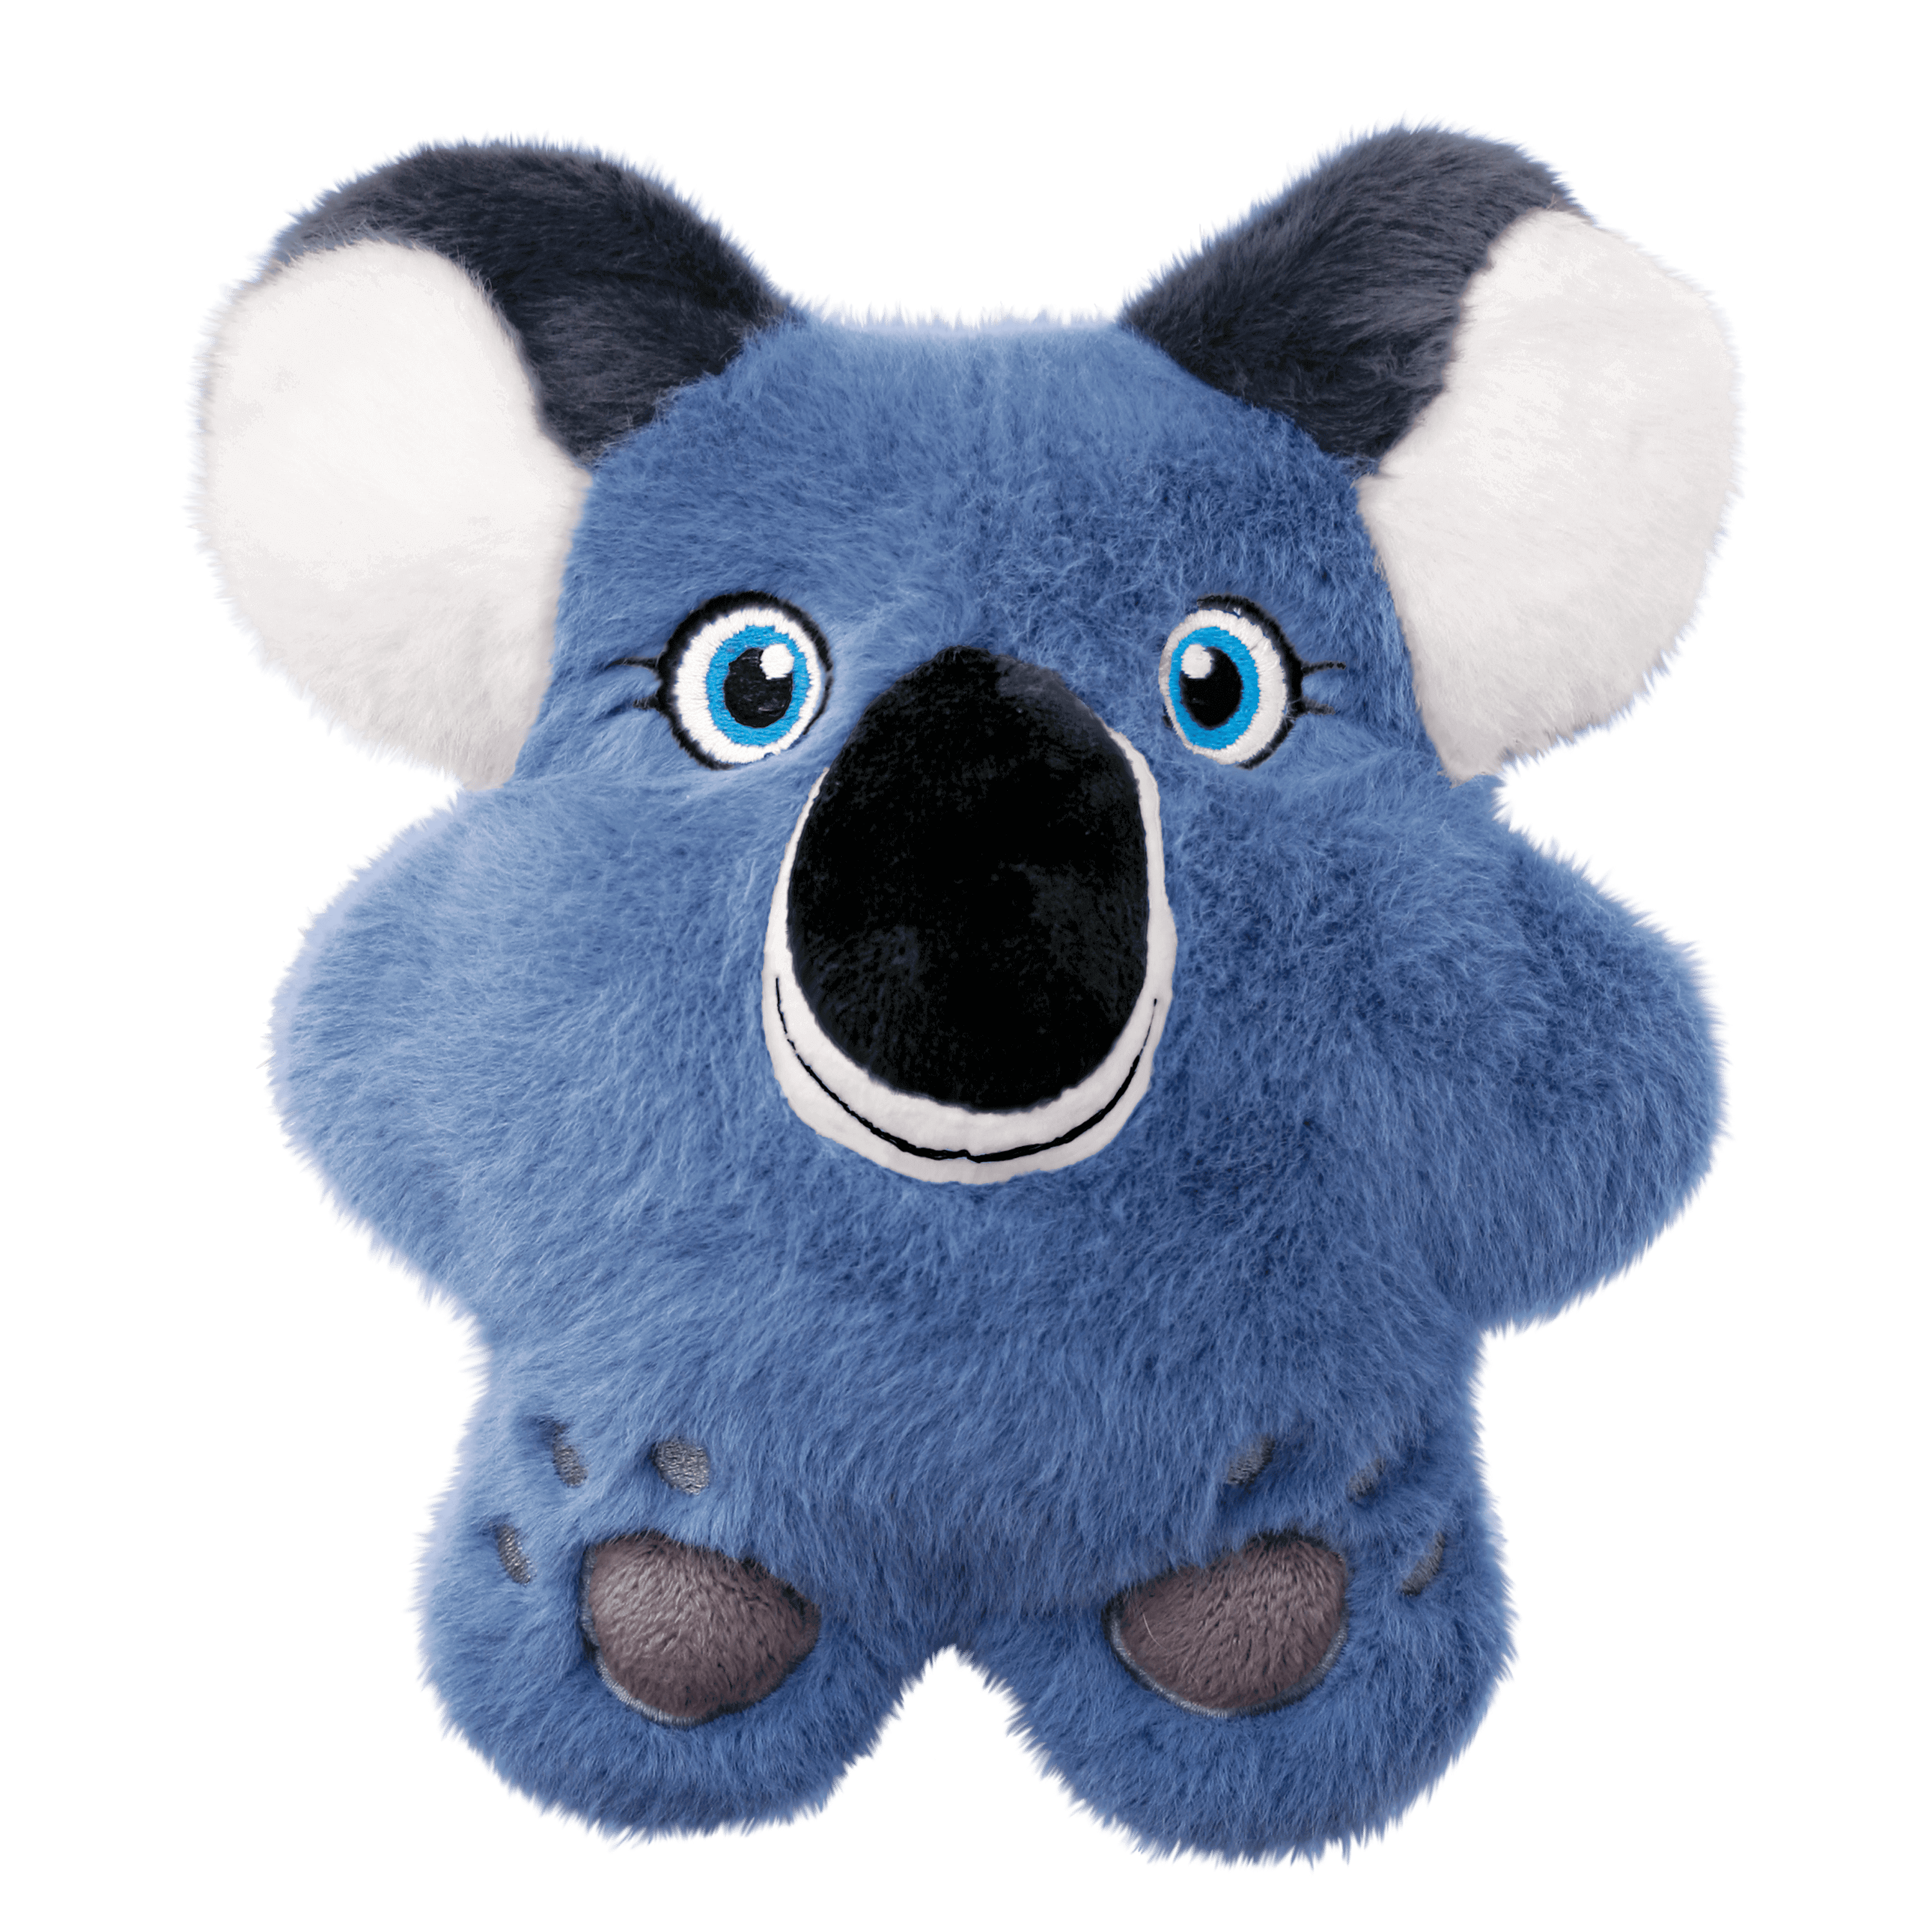 KONG - Snuzzles Koala (Dog Toy)